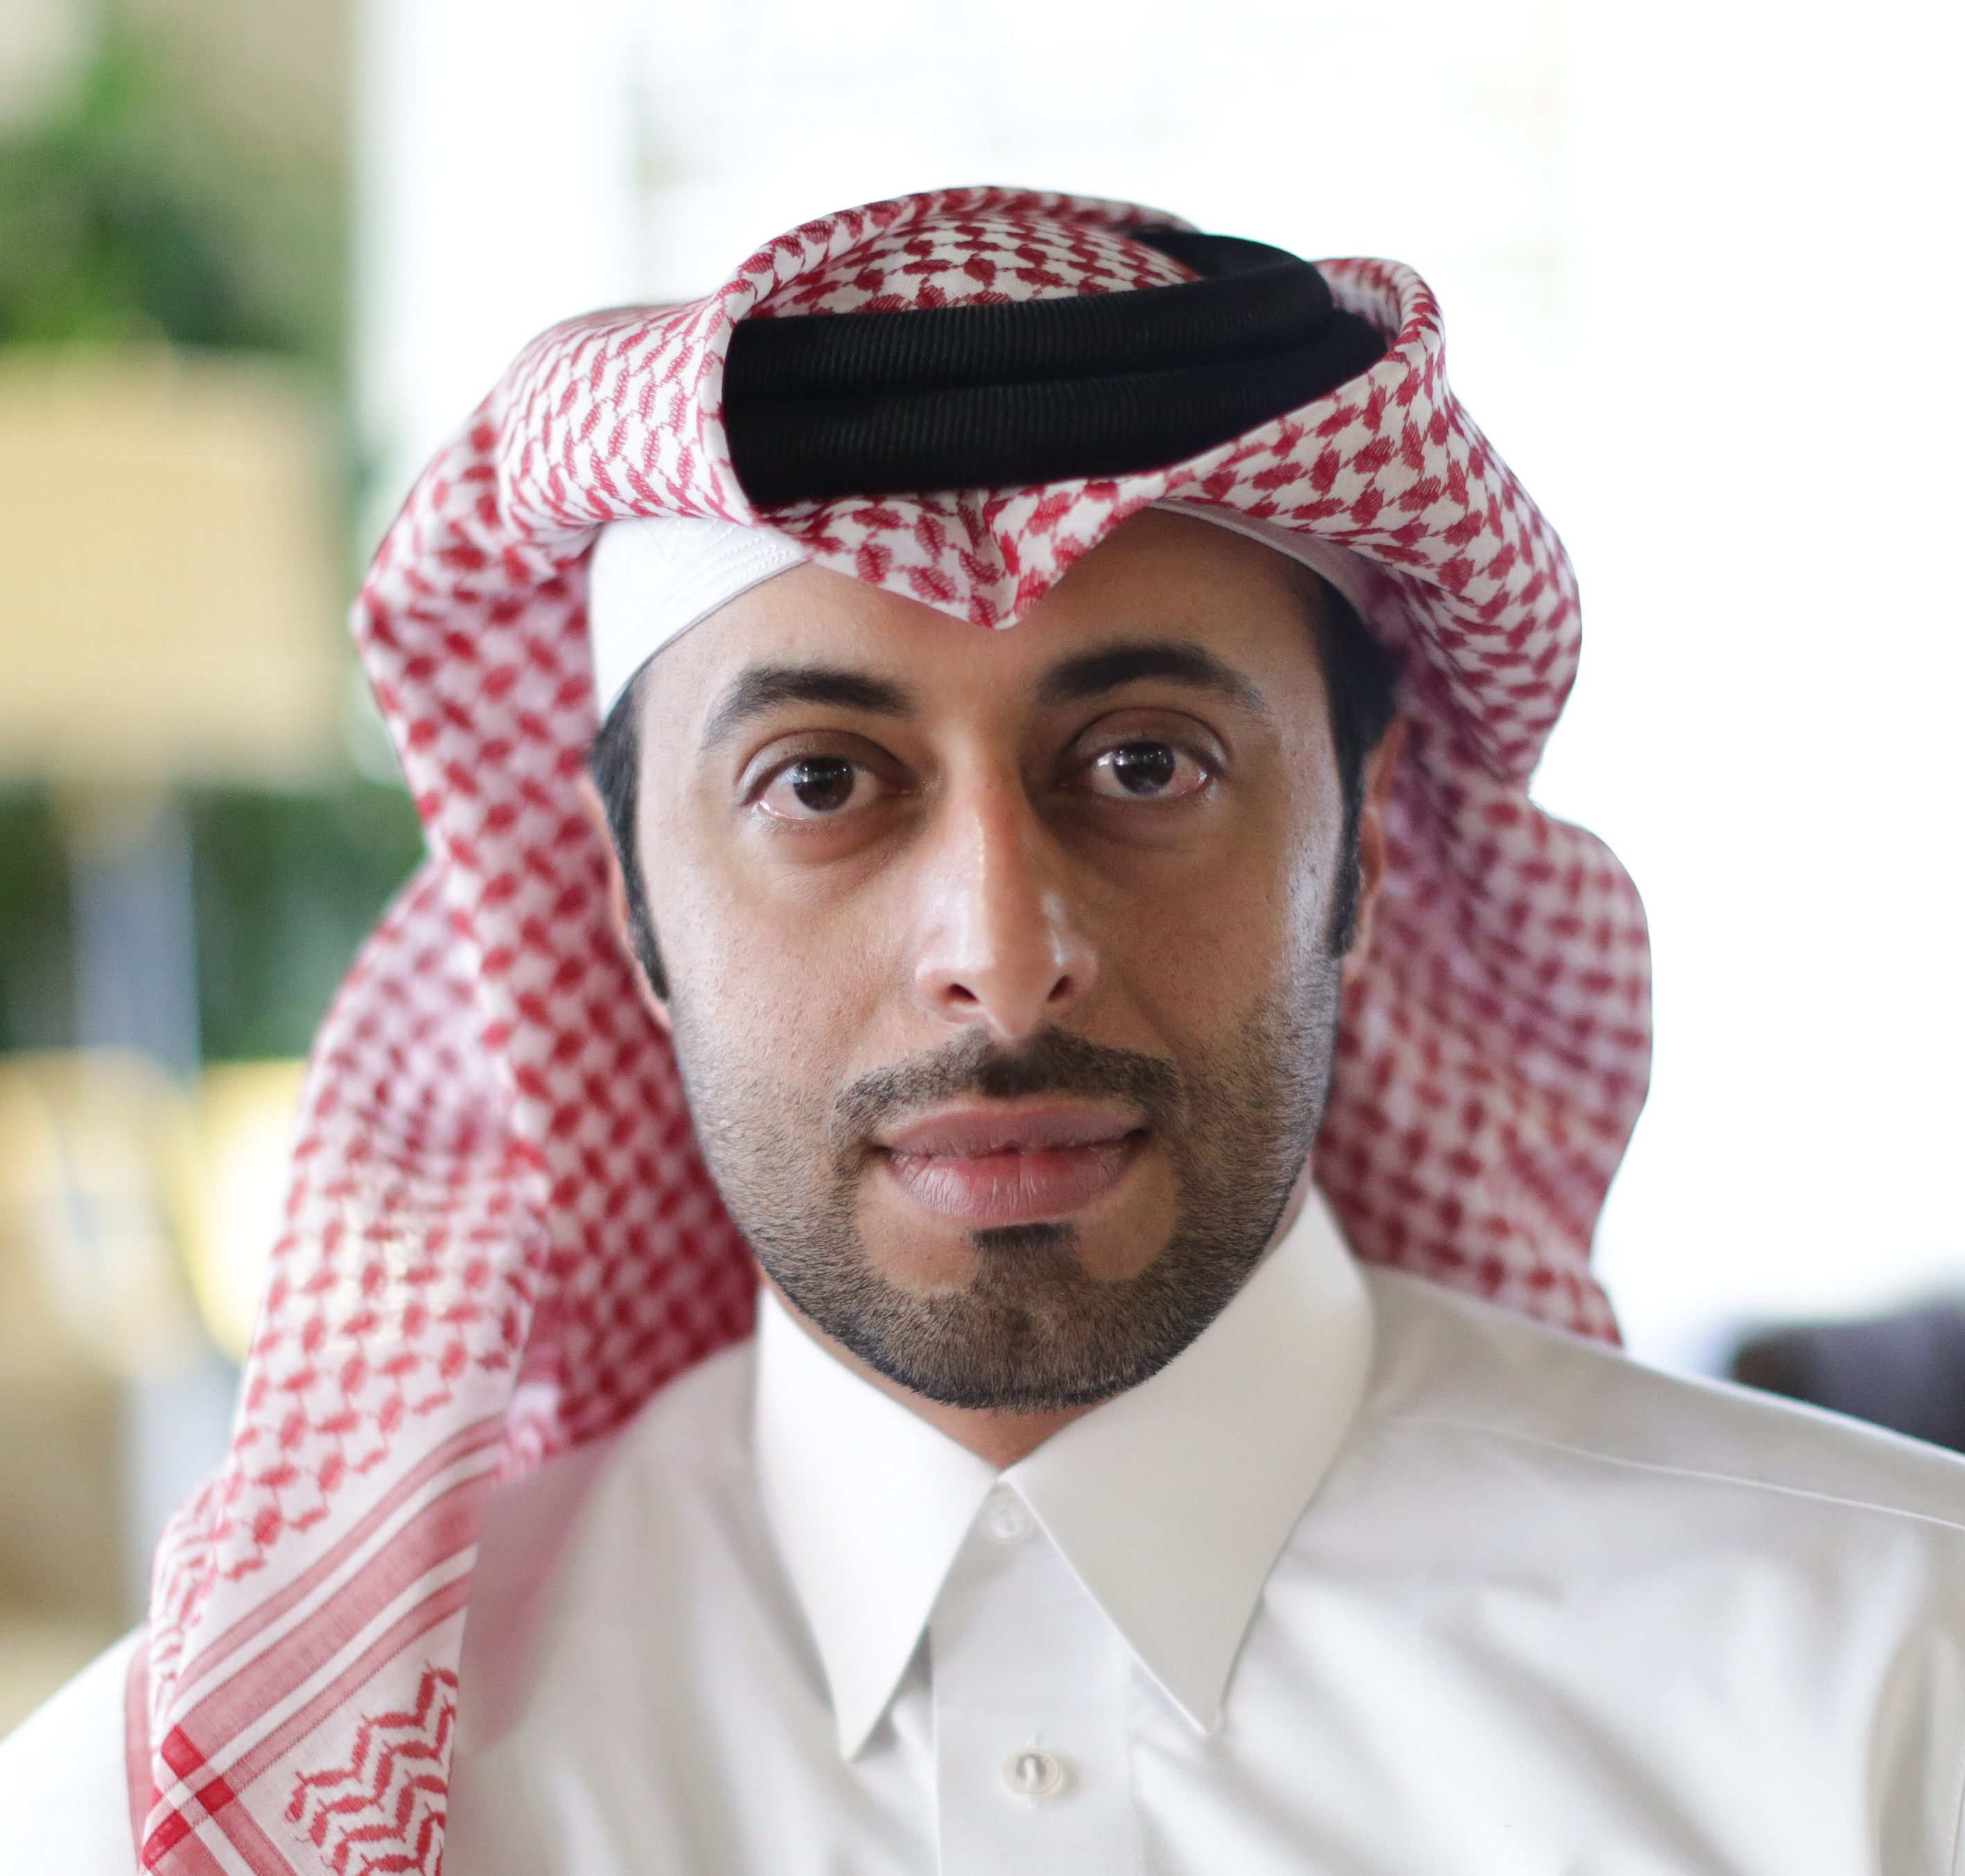 Mr. Abdulla Hamad Al Atiyya